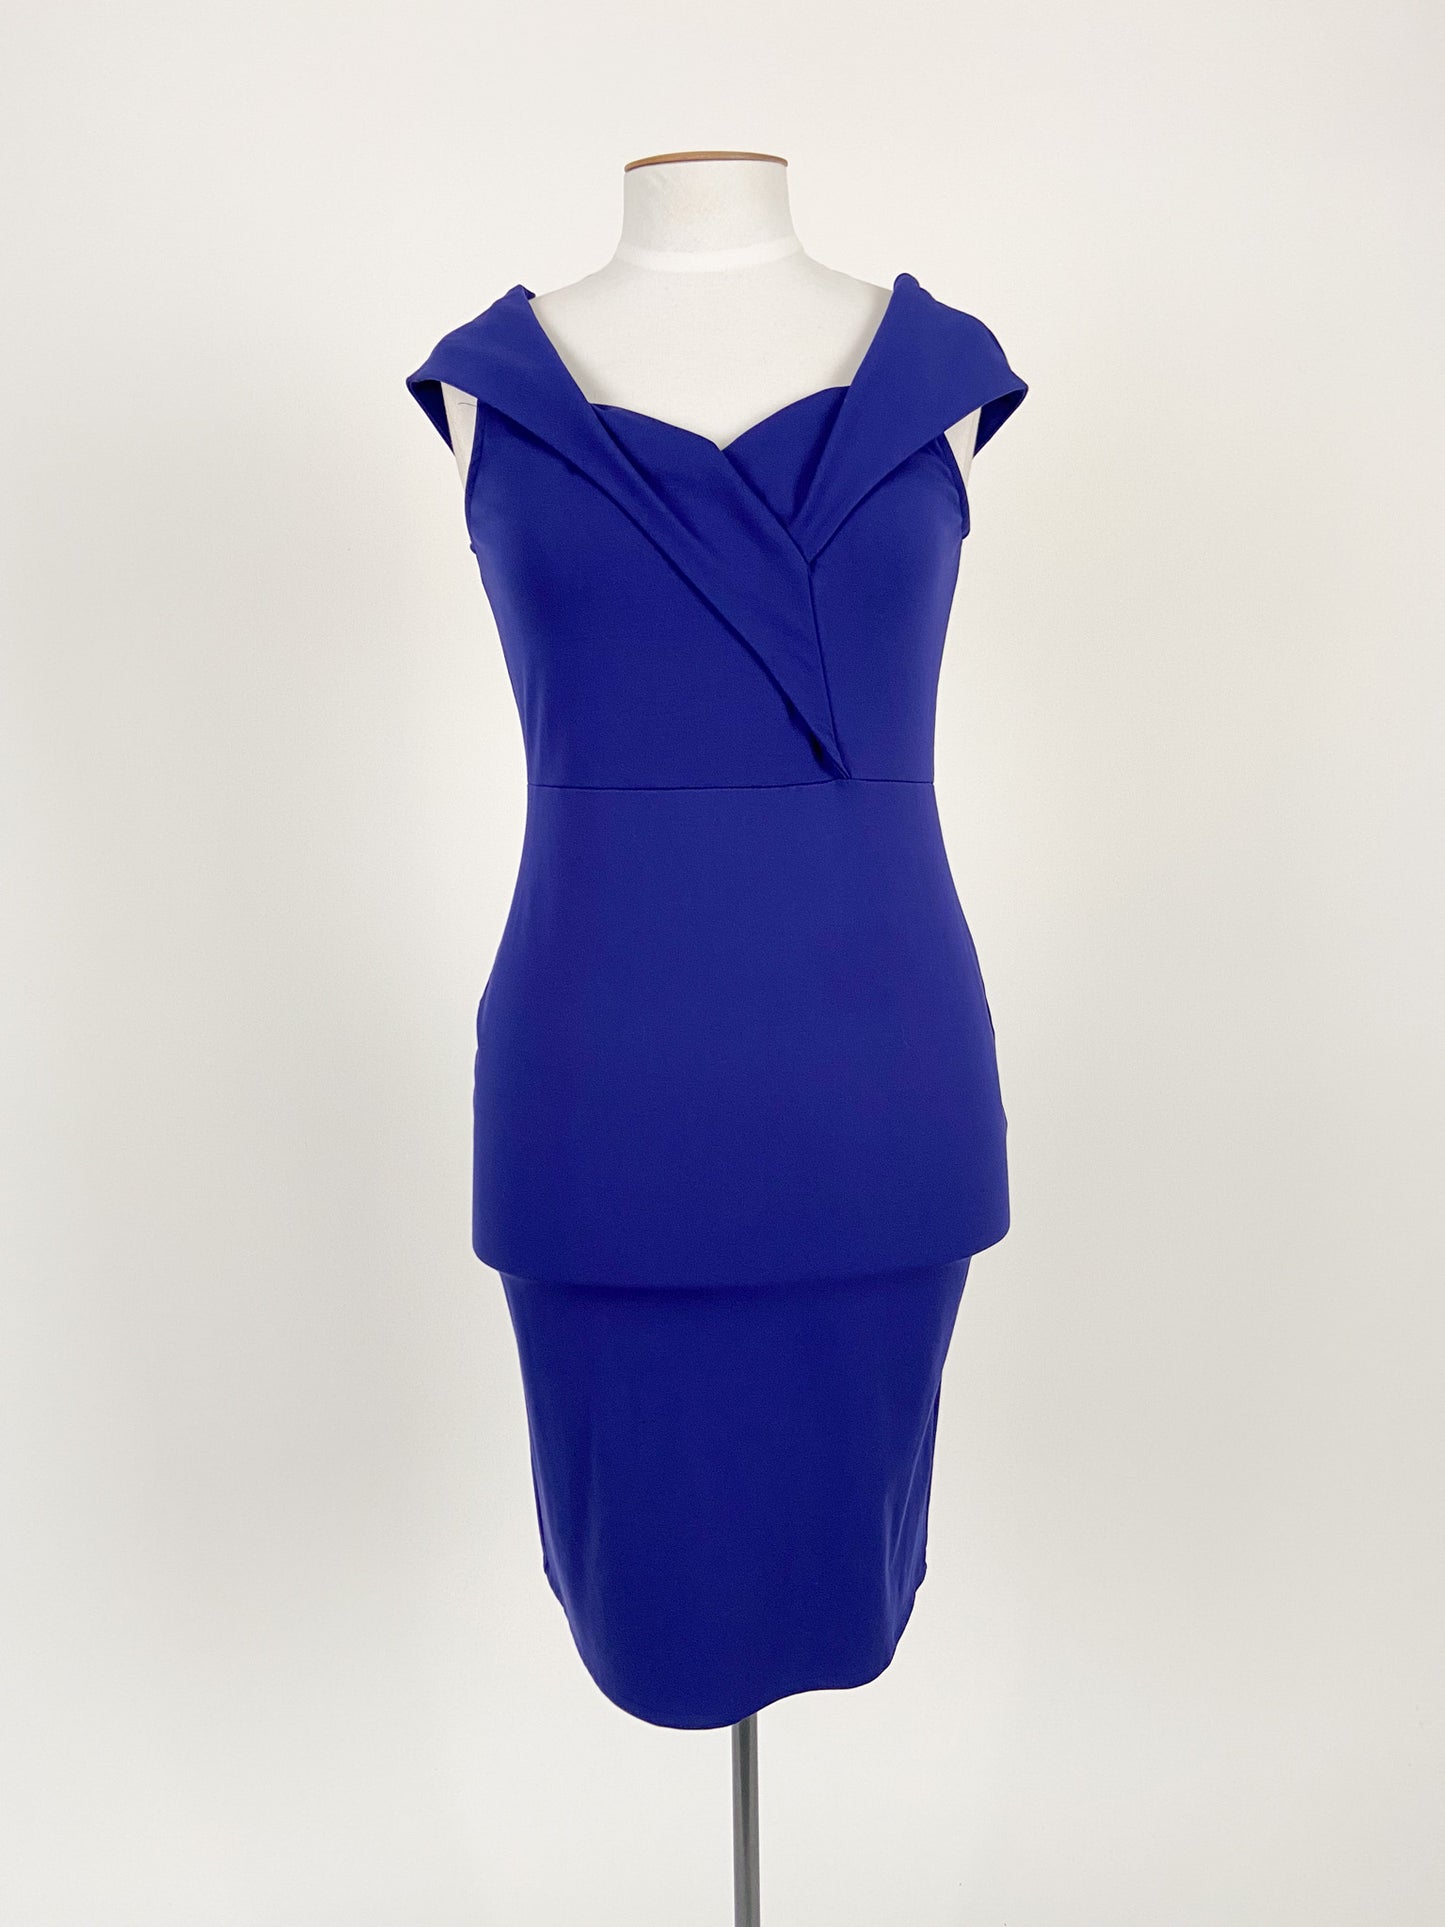 Tussah | Blue Cocktail/Formal Dress | Size 14